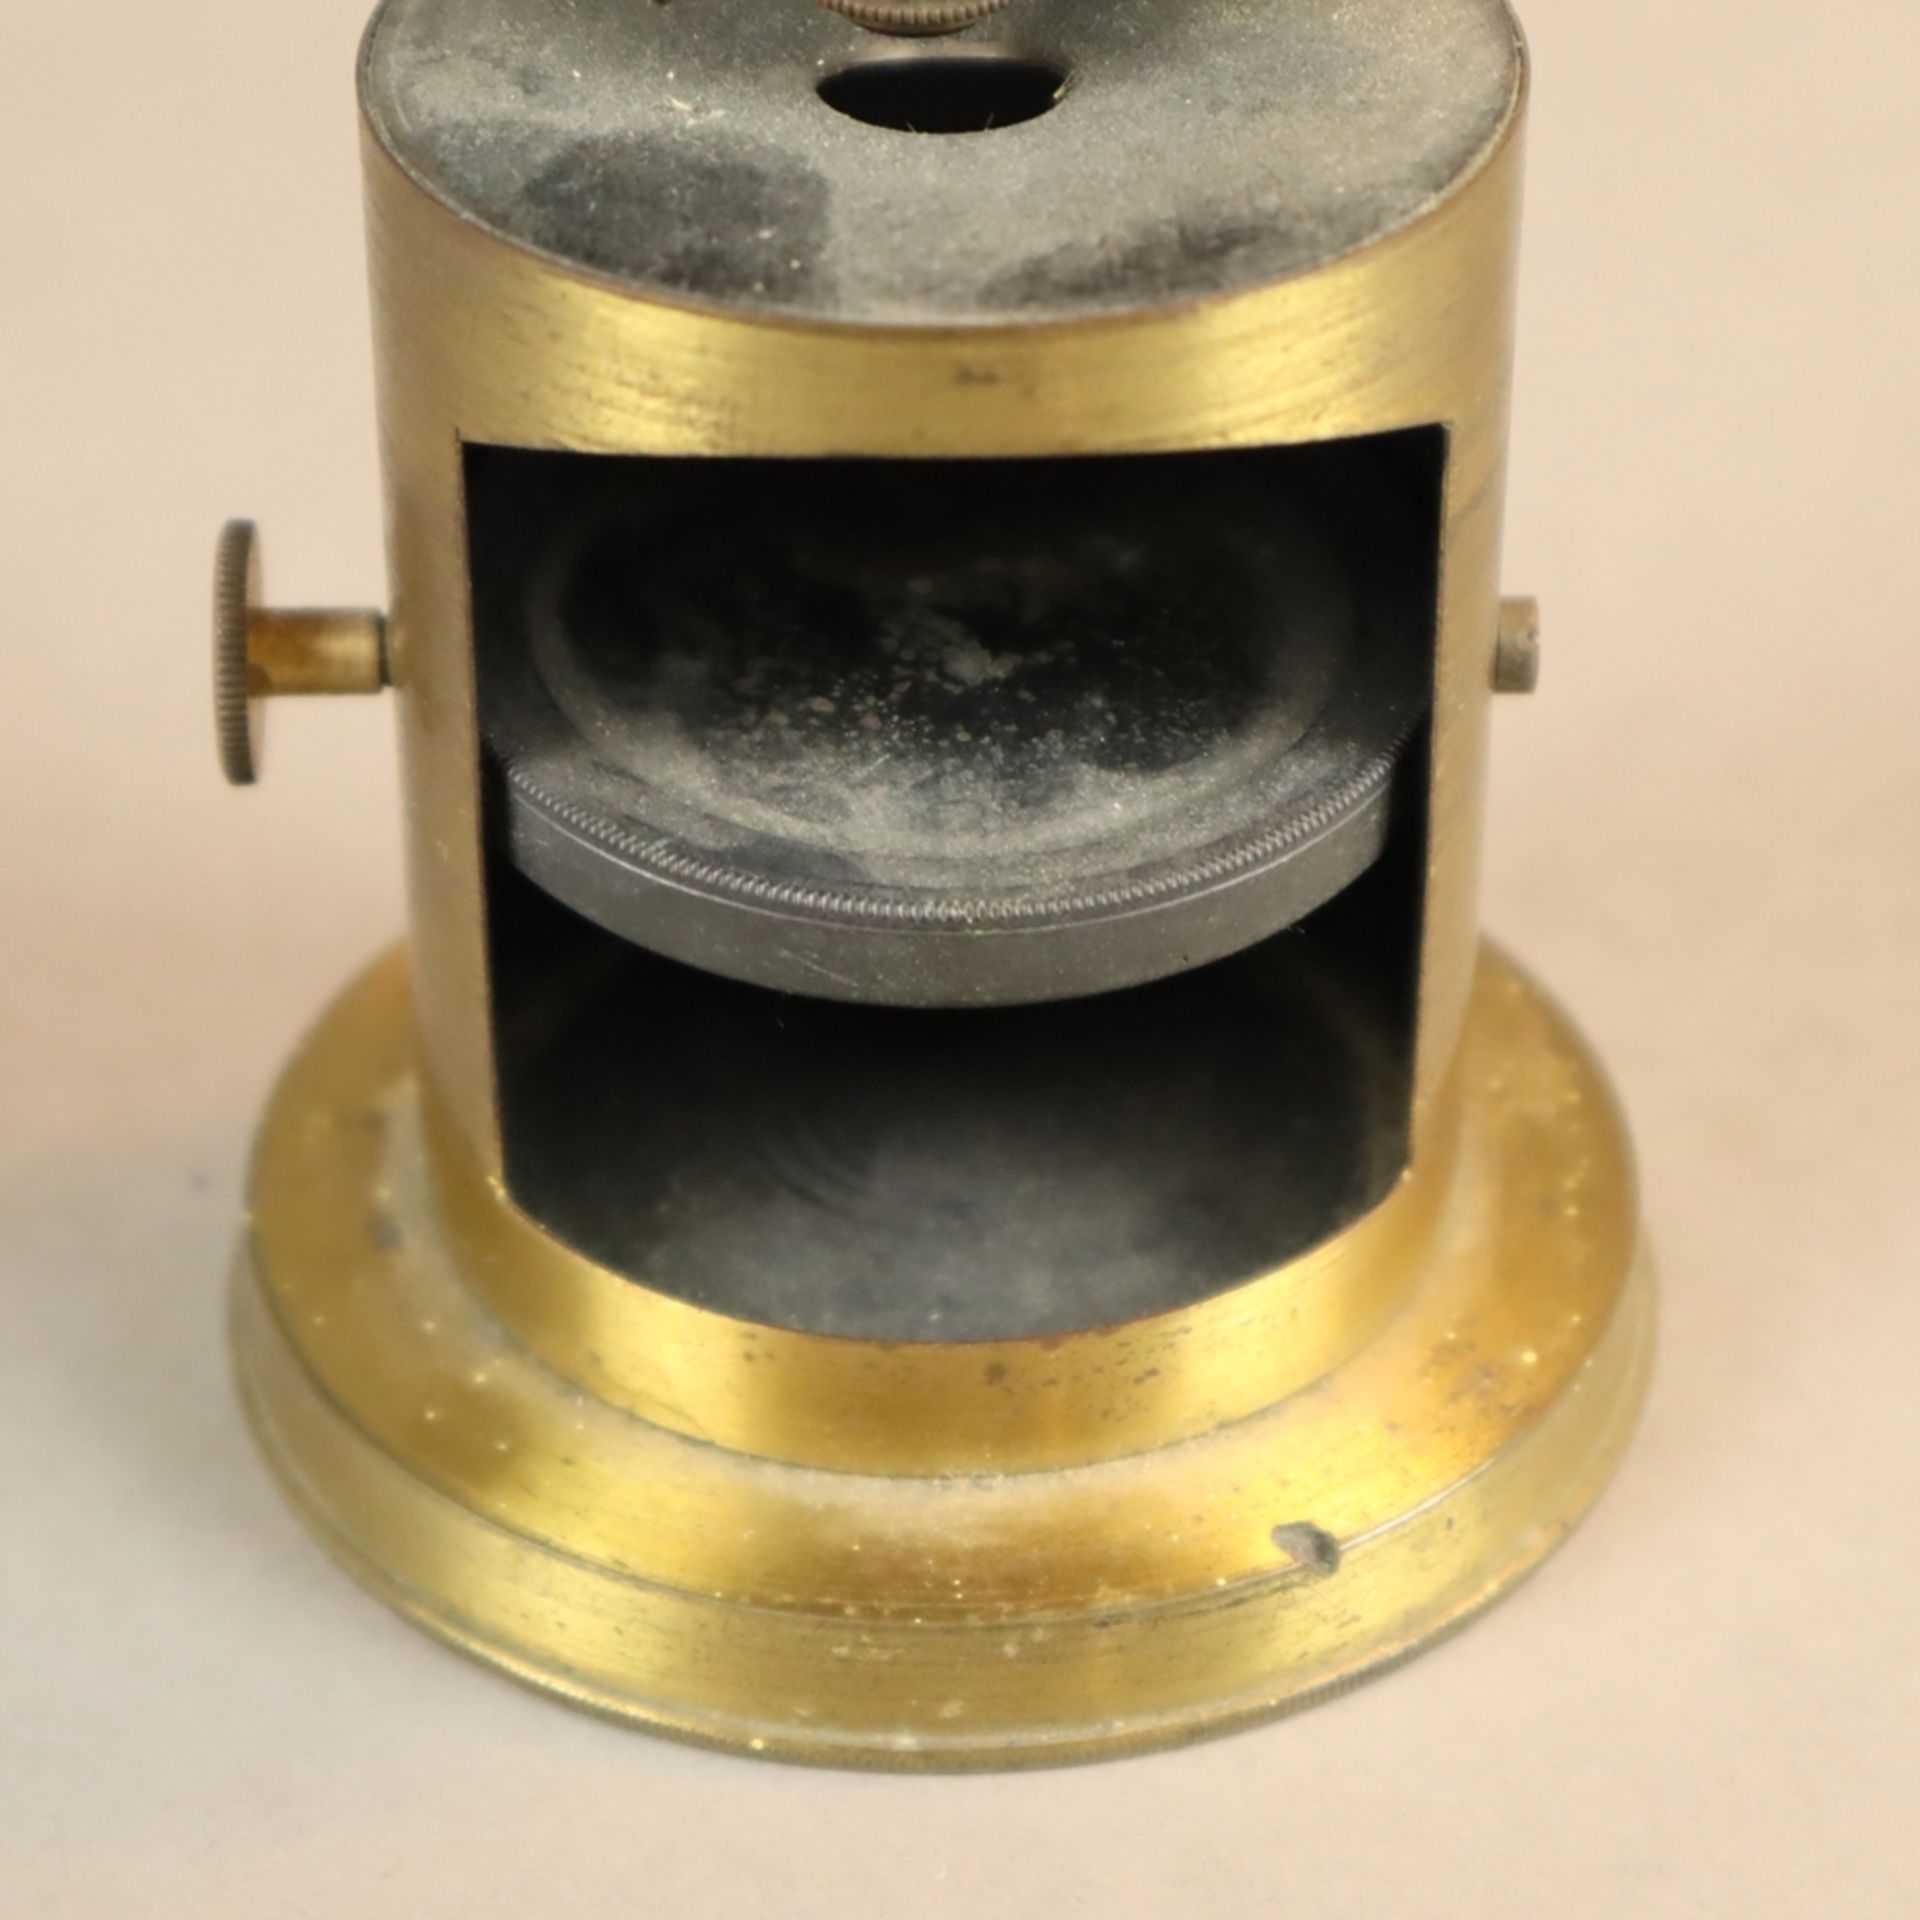 Trommelmikroskop - Anfang 20.Jh., Messing und Metall, röhrenförmiges Gehäuse, Einzelspiegel drehbar - Bild 4 aus 4